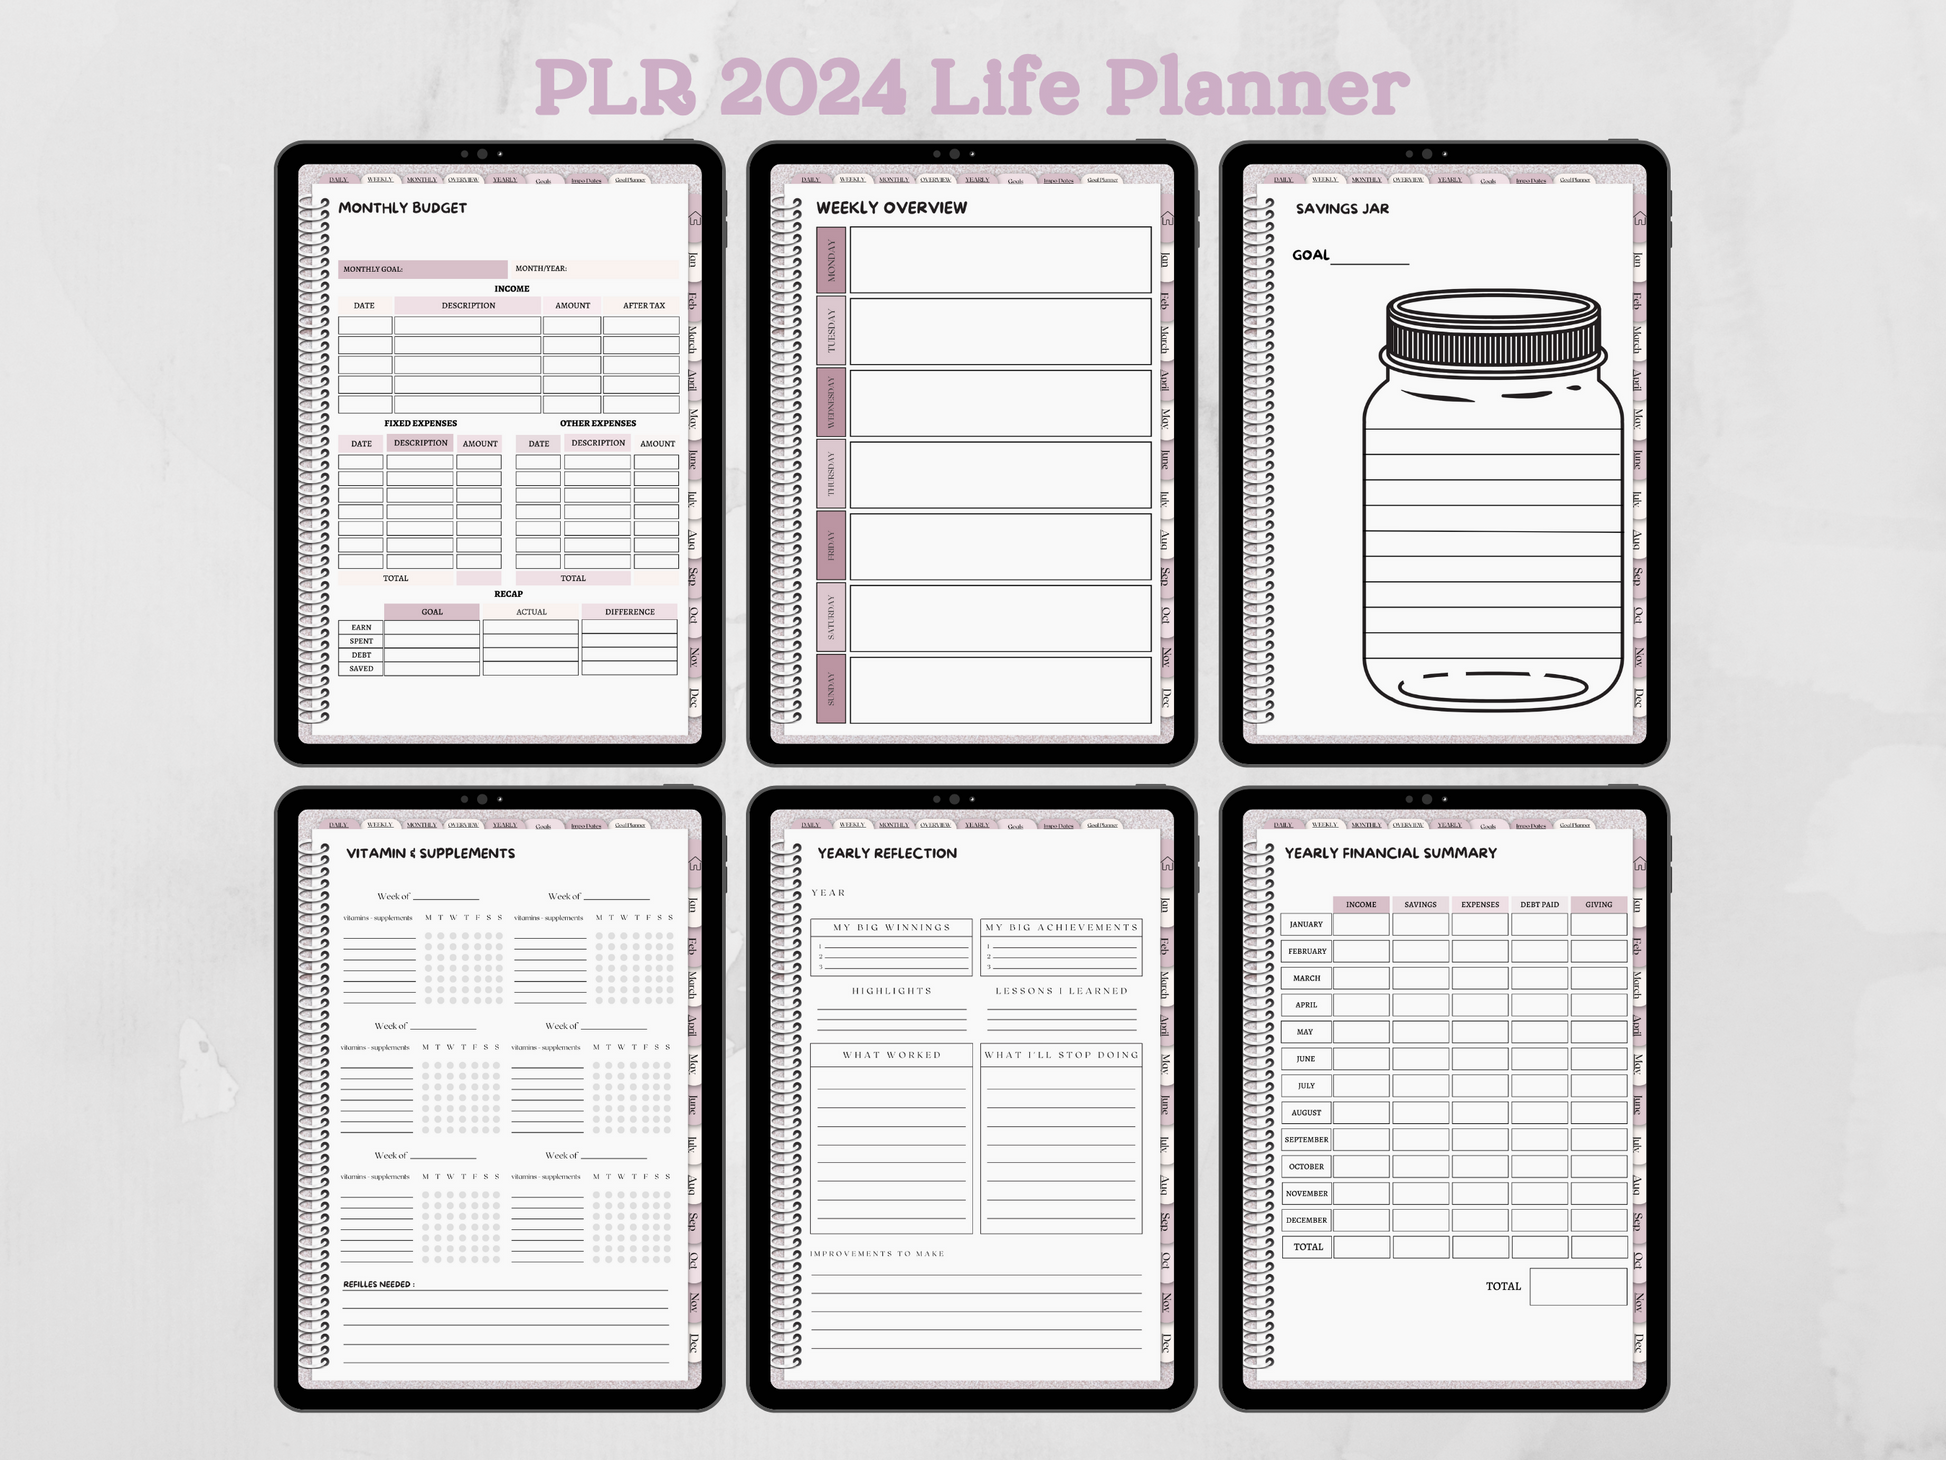 PLR 2024 Life Planner